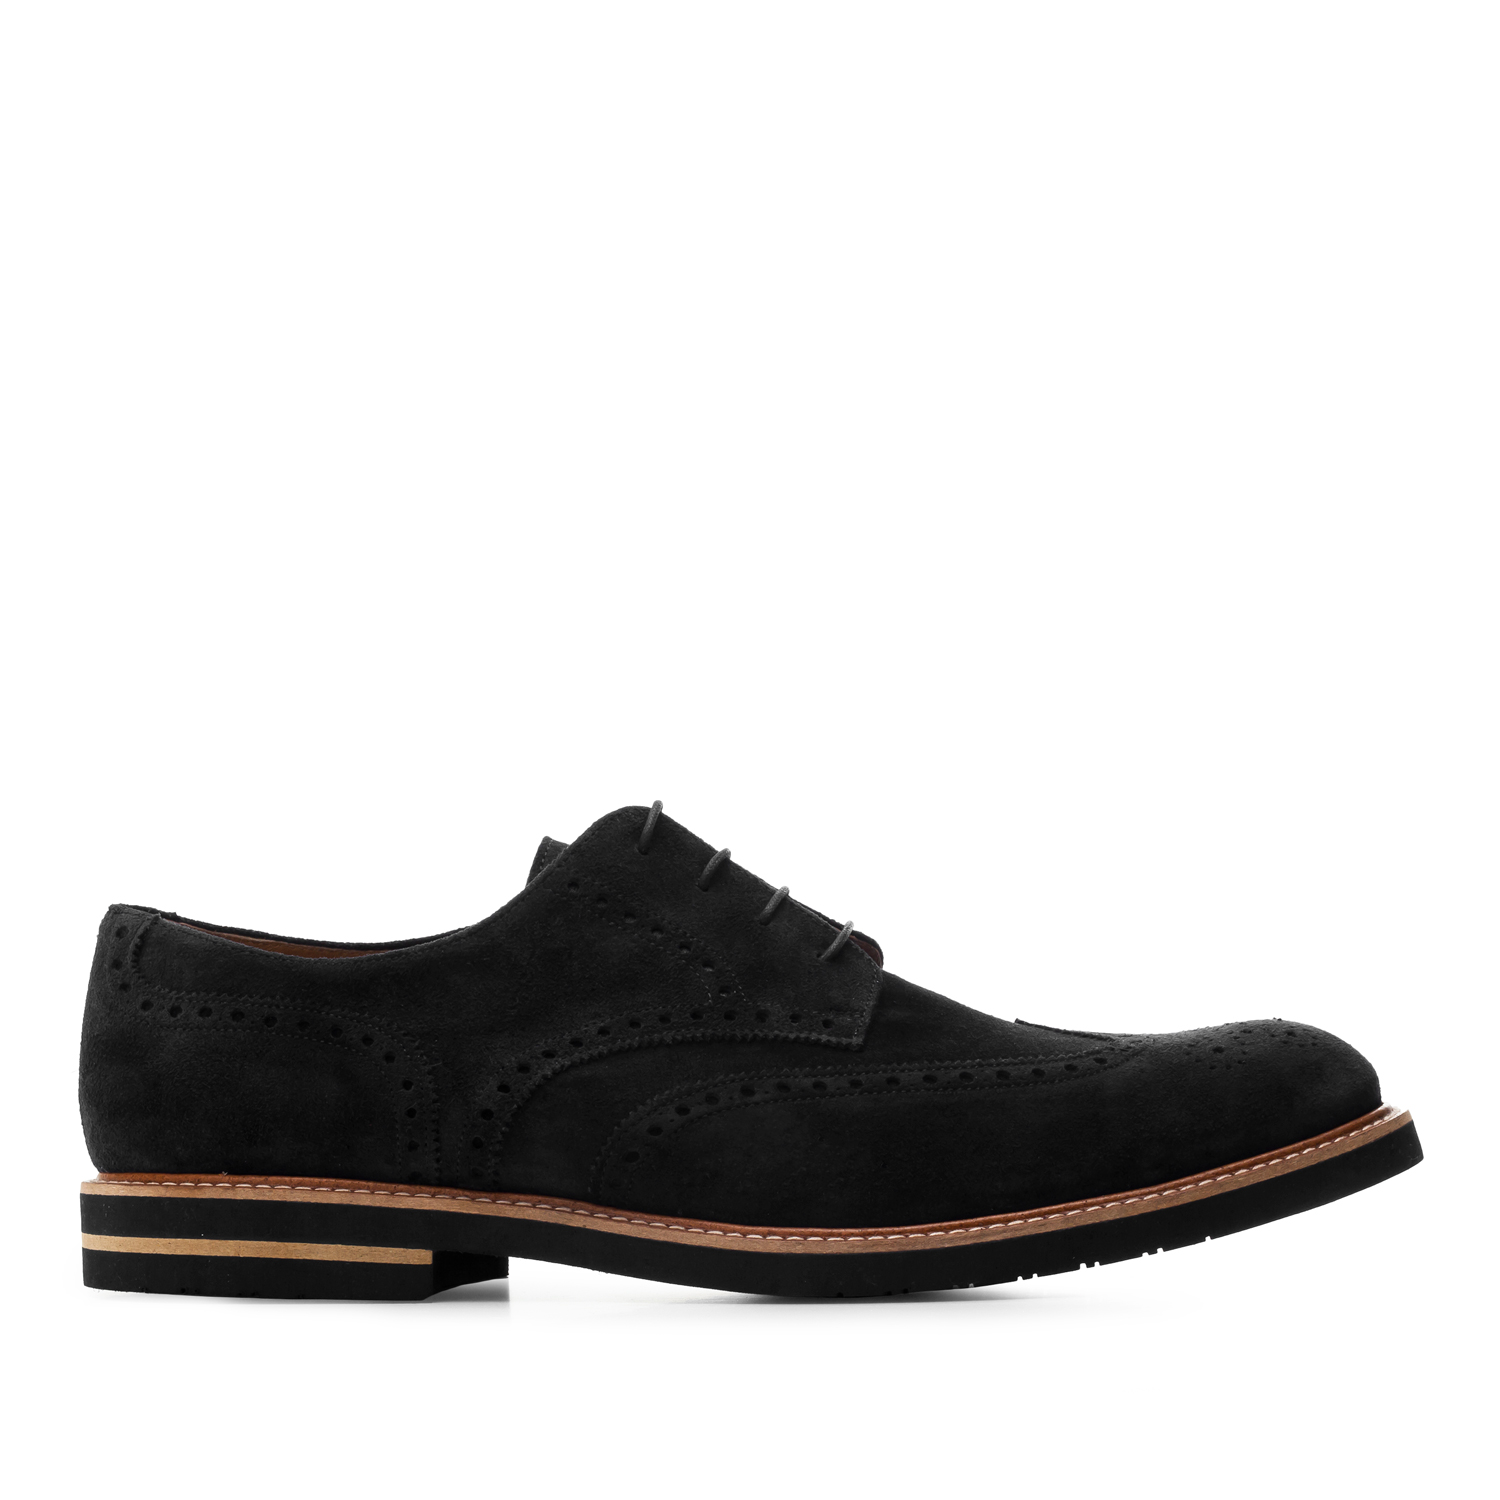 Zapatos estilo Oxford Serraje Negro 